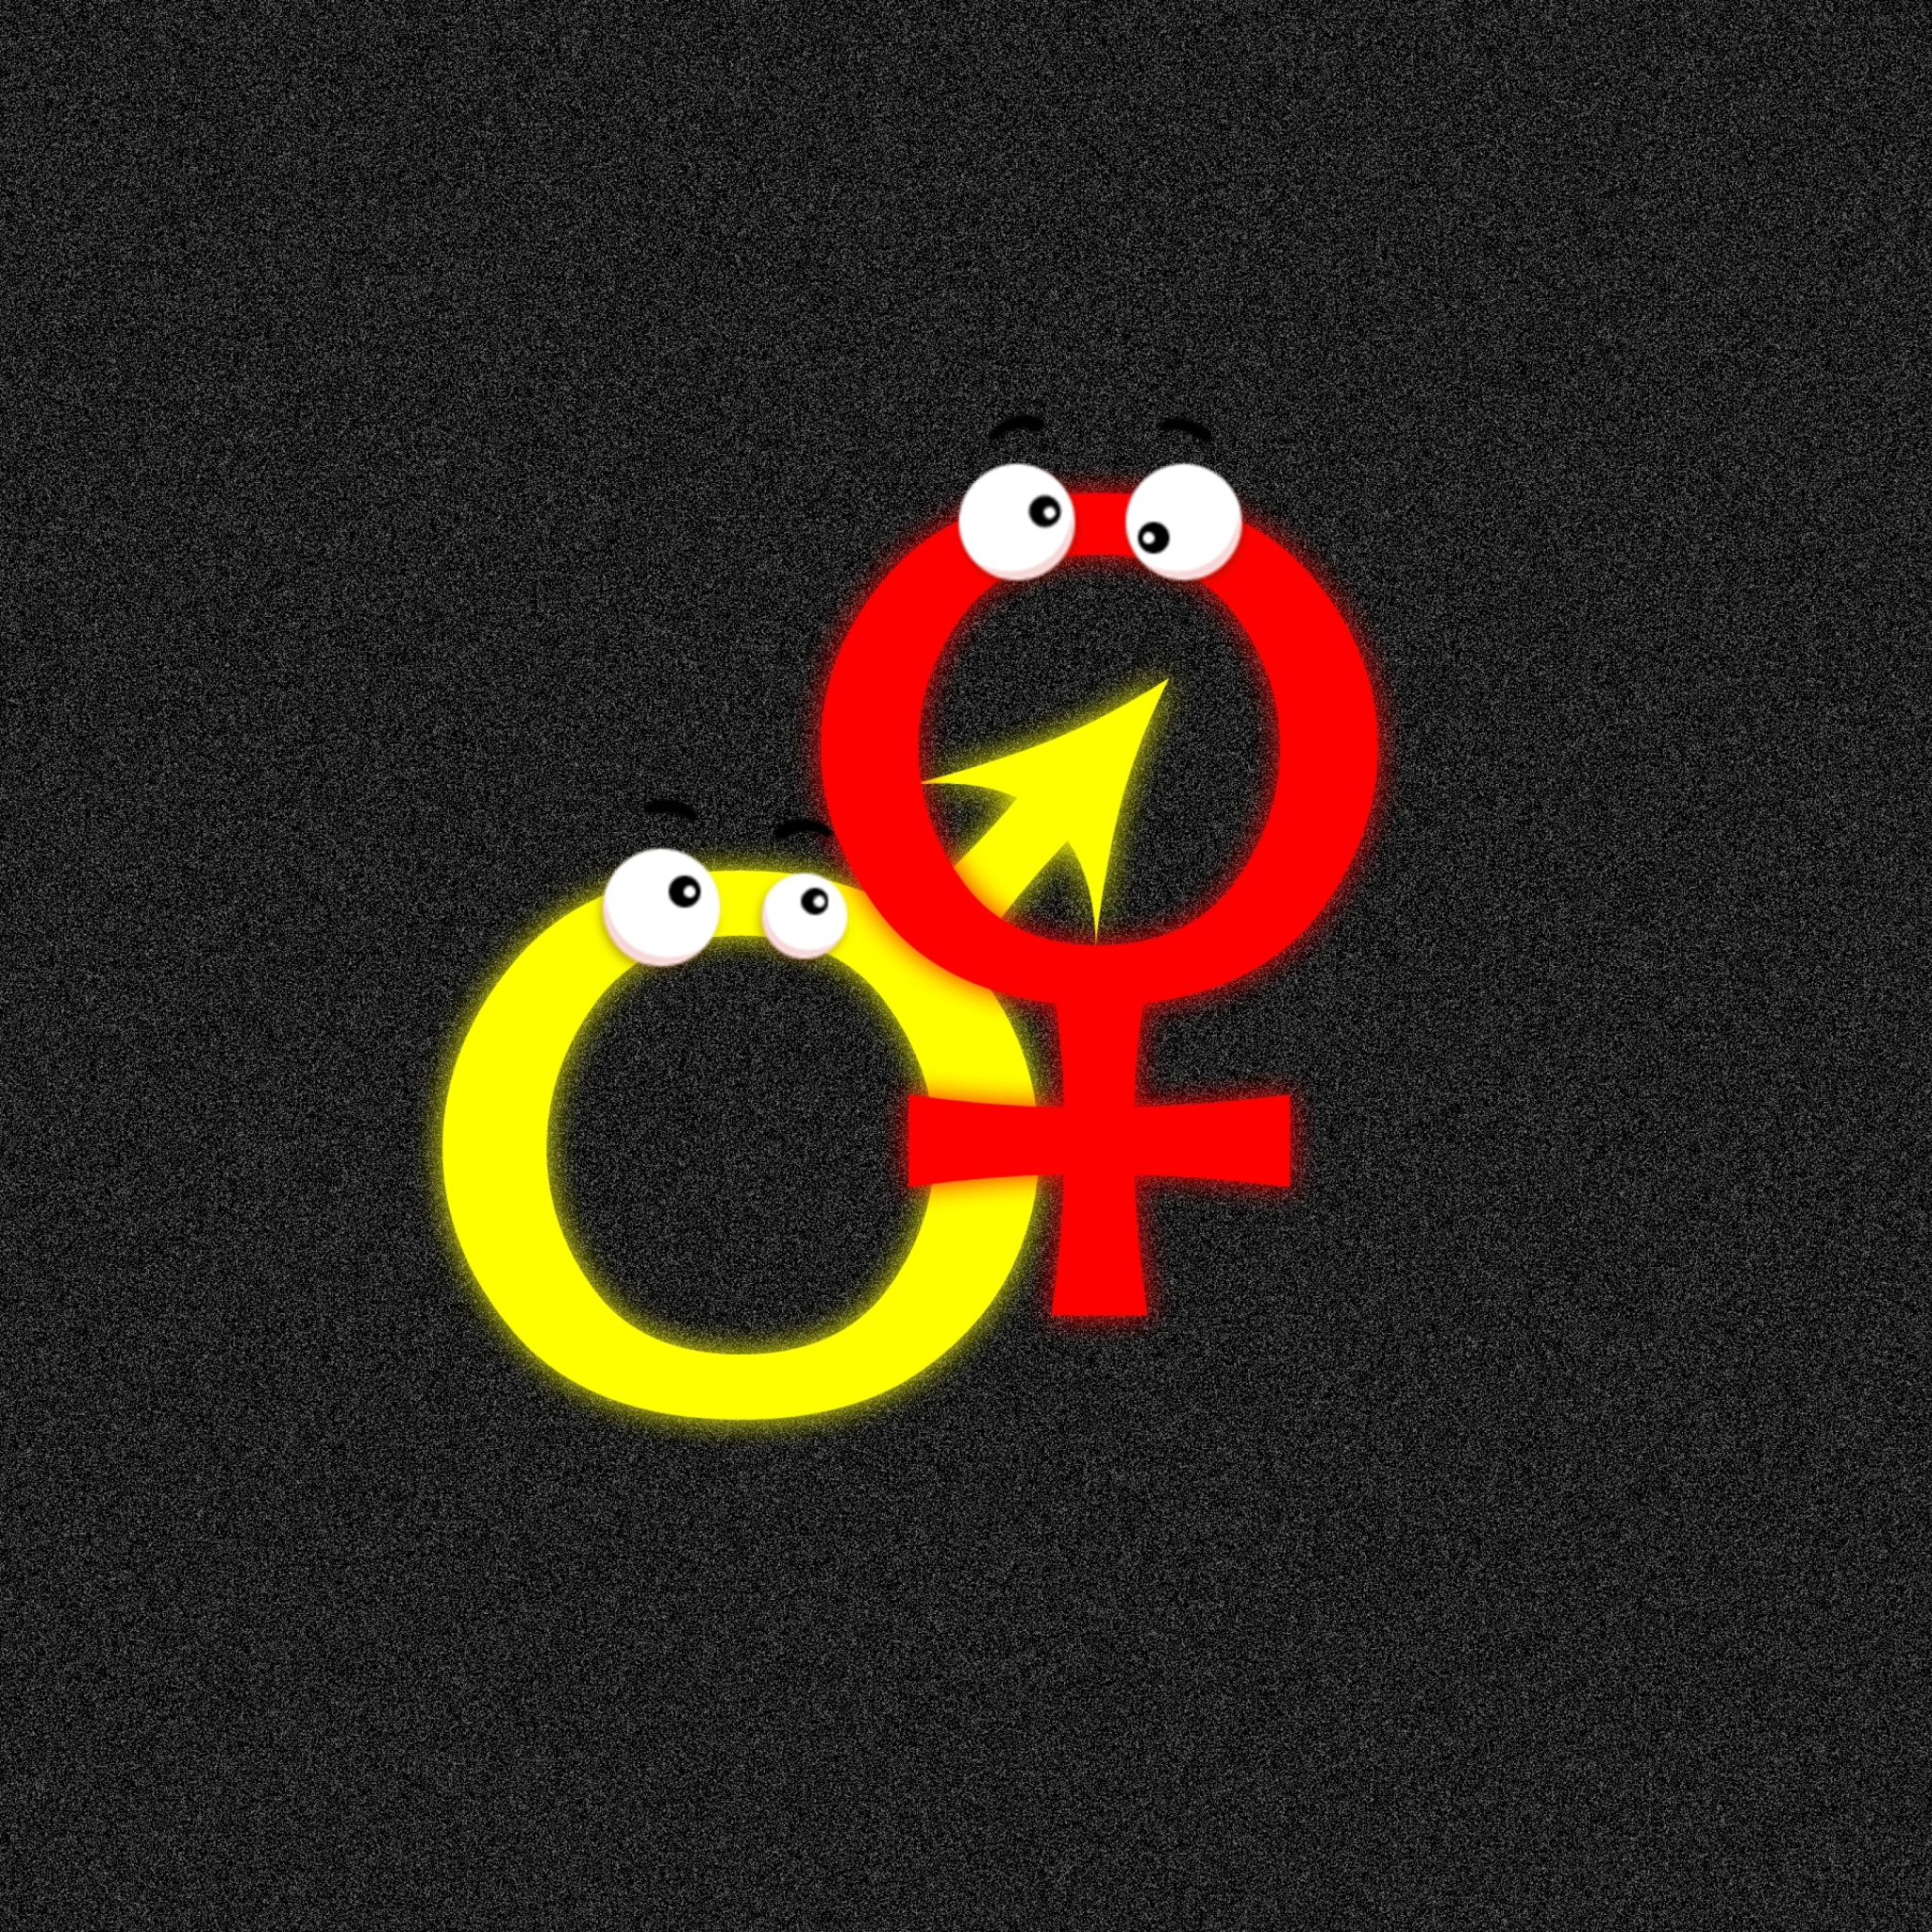 Funny Gender Symbols wallpaper 2048x2048